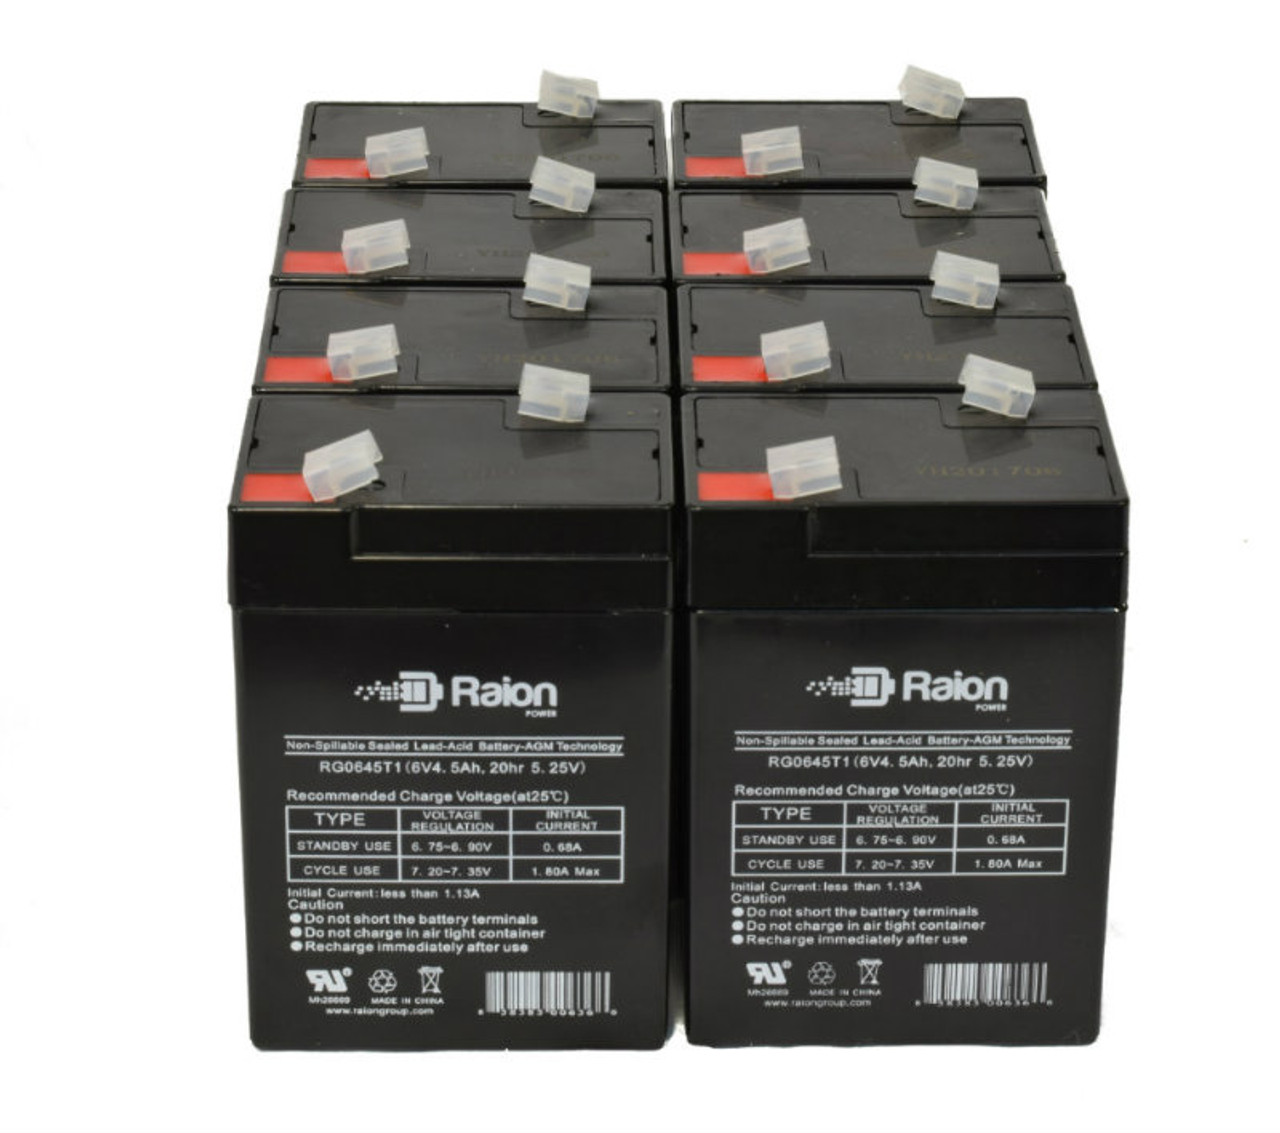 Raion Power 6V 4.5Ah Replacement Emergency Light Battery for AtLite 24-1002 - 8 Pack